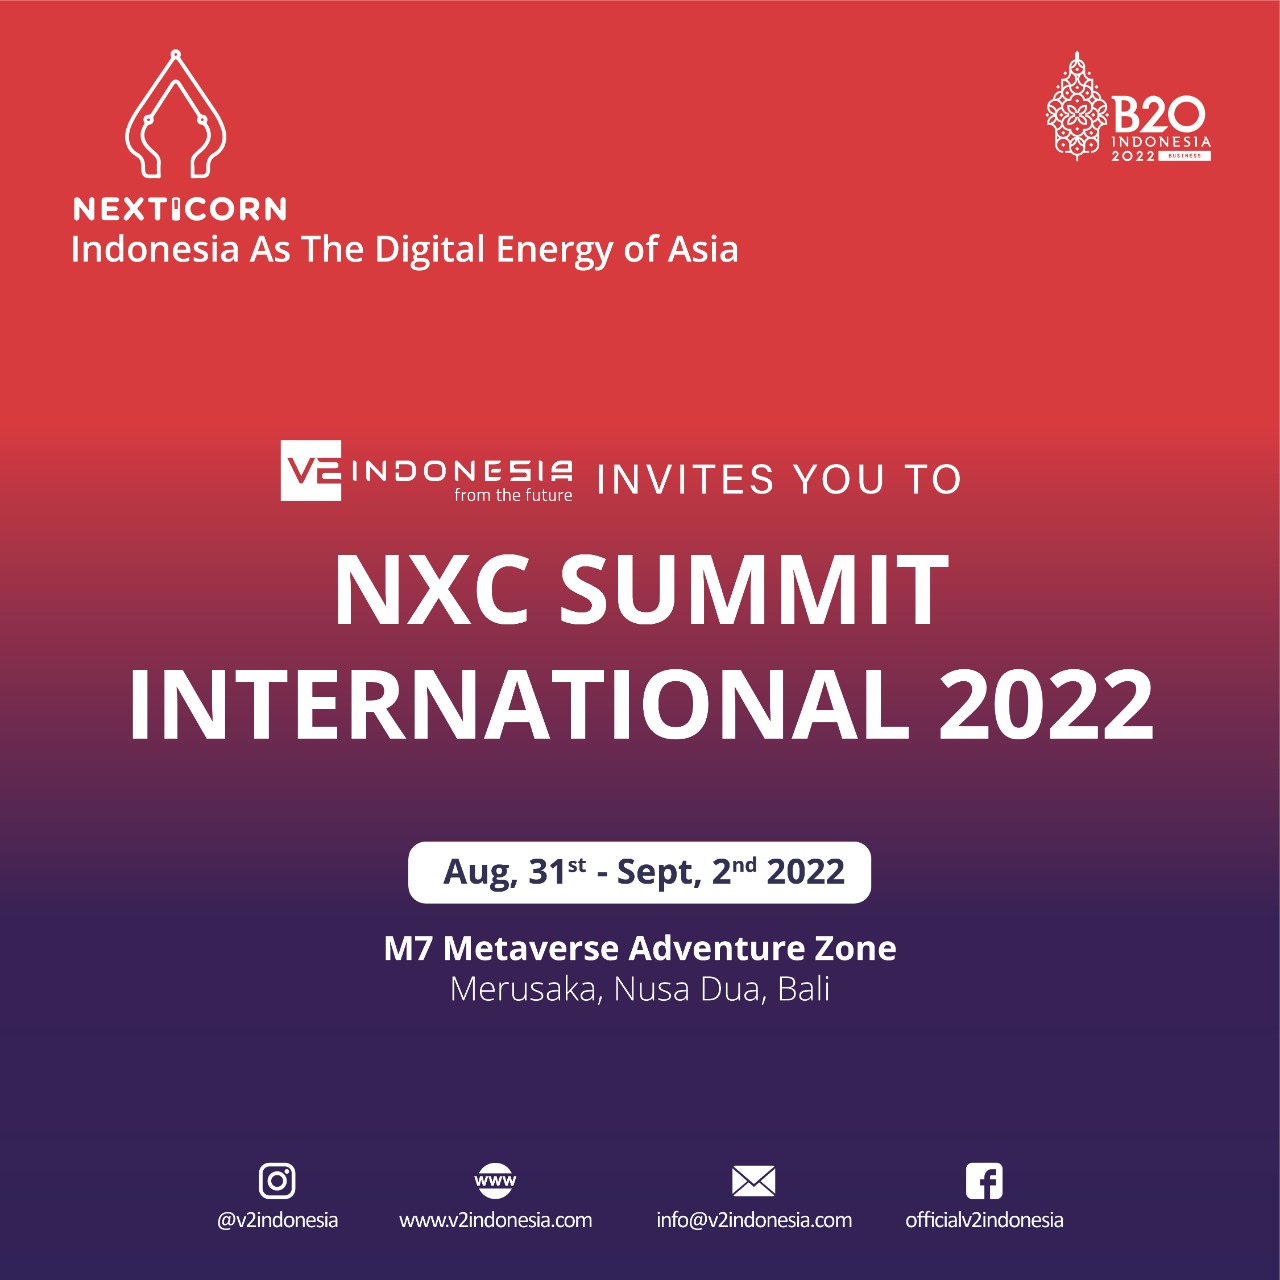 NXC International Summit 2022